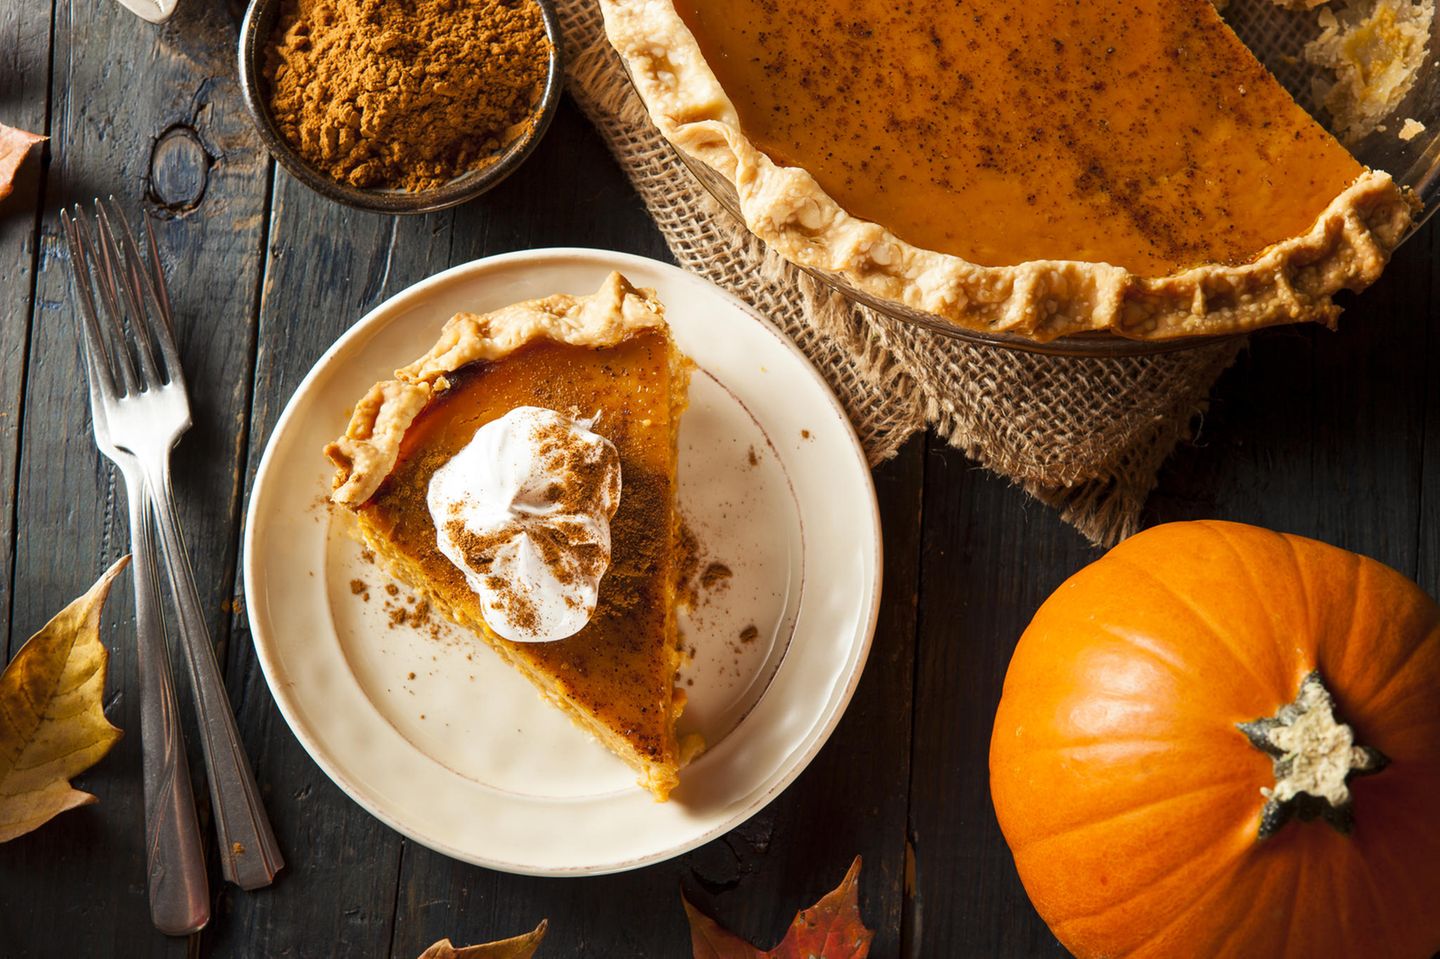 Pumpkin Pie: Make Your Own Original from the USA